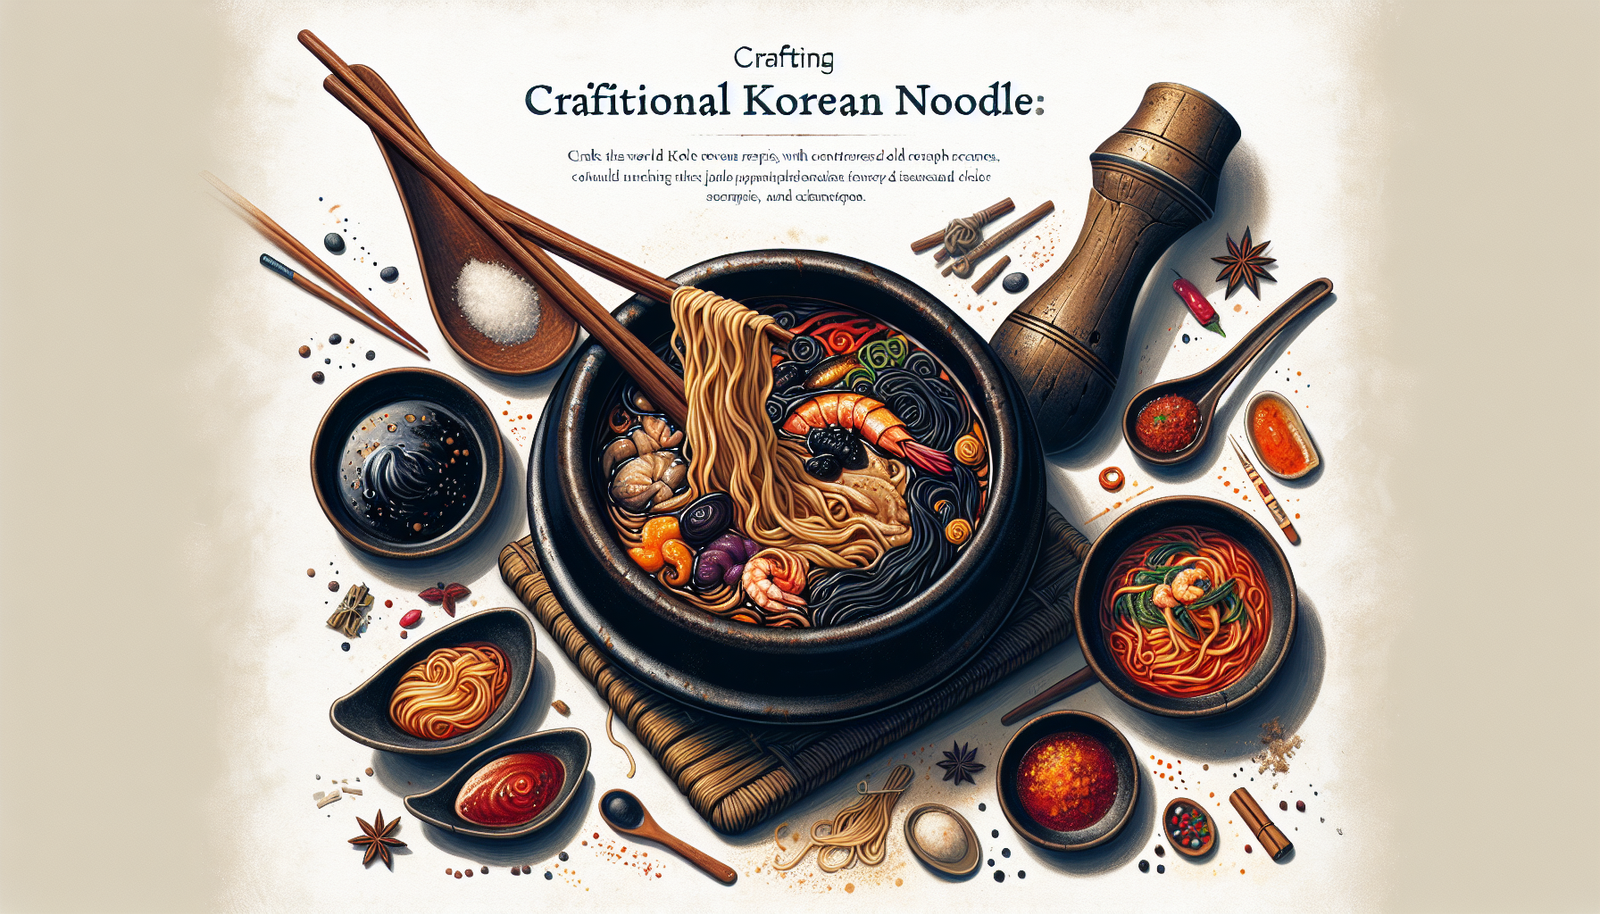 How Are Traditional Korean Noodles Like Jjajangmyeon And Jjamppong Prepared?